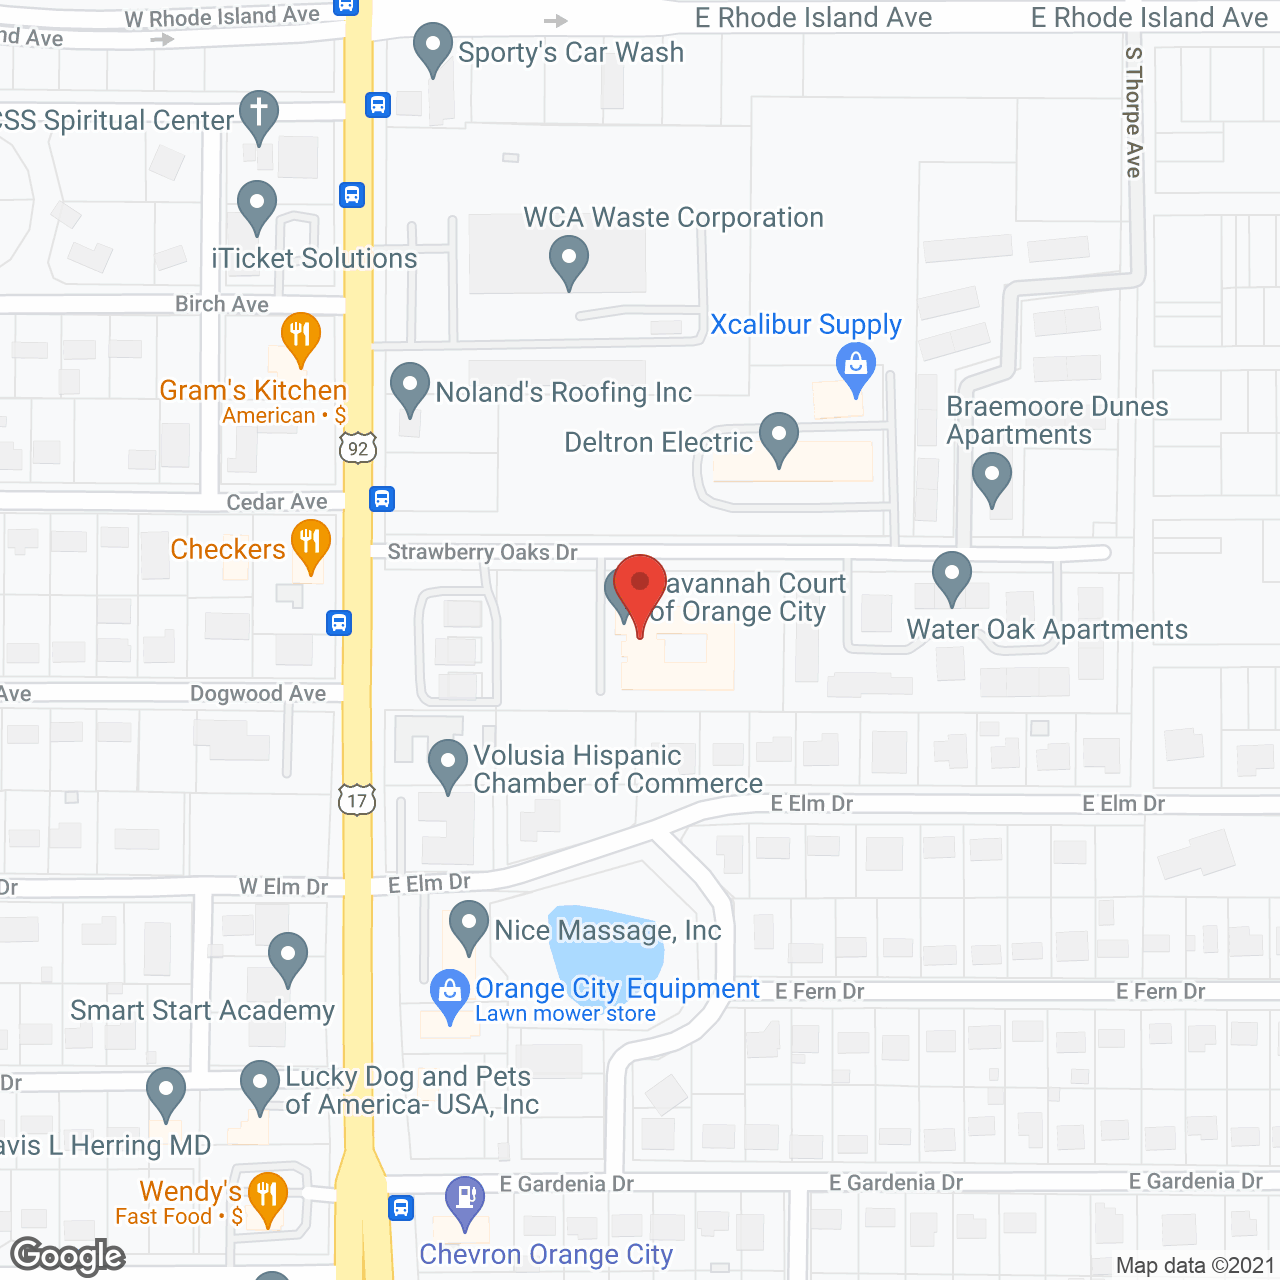 Savannah Court of Orange City in google map